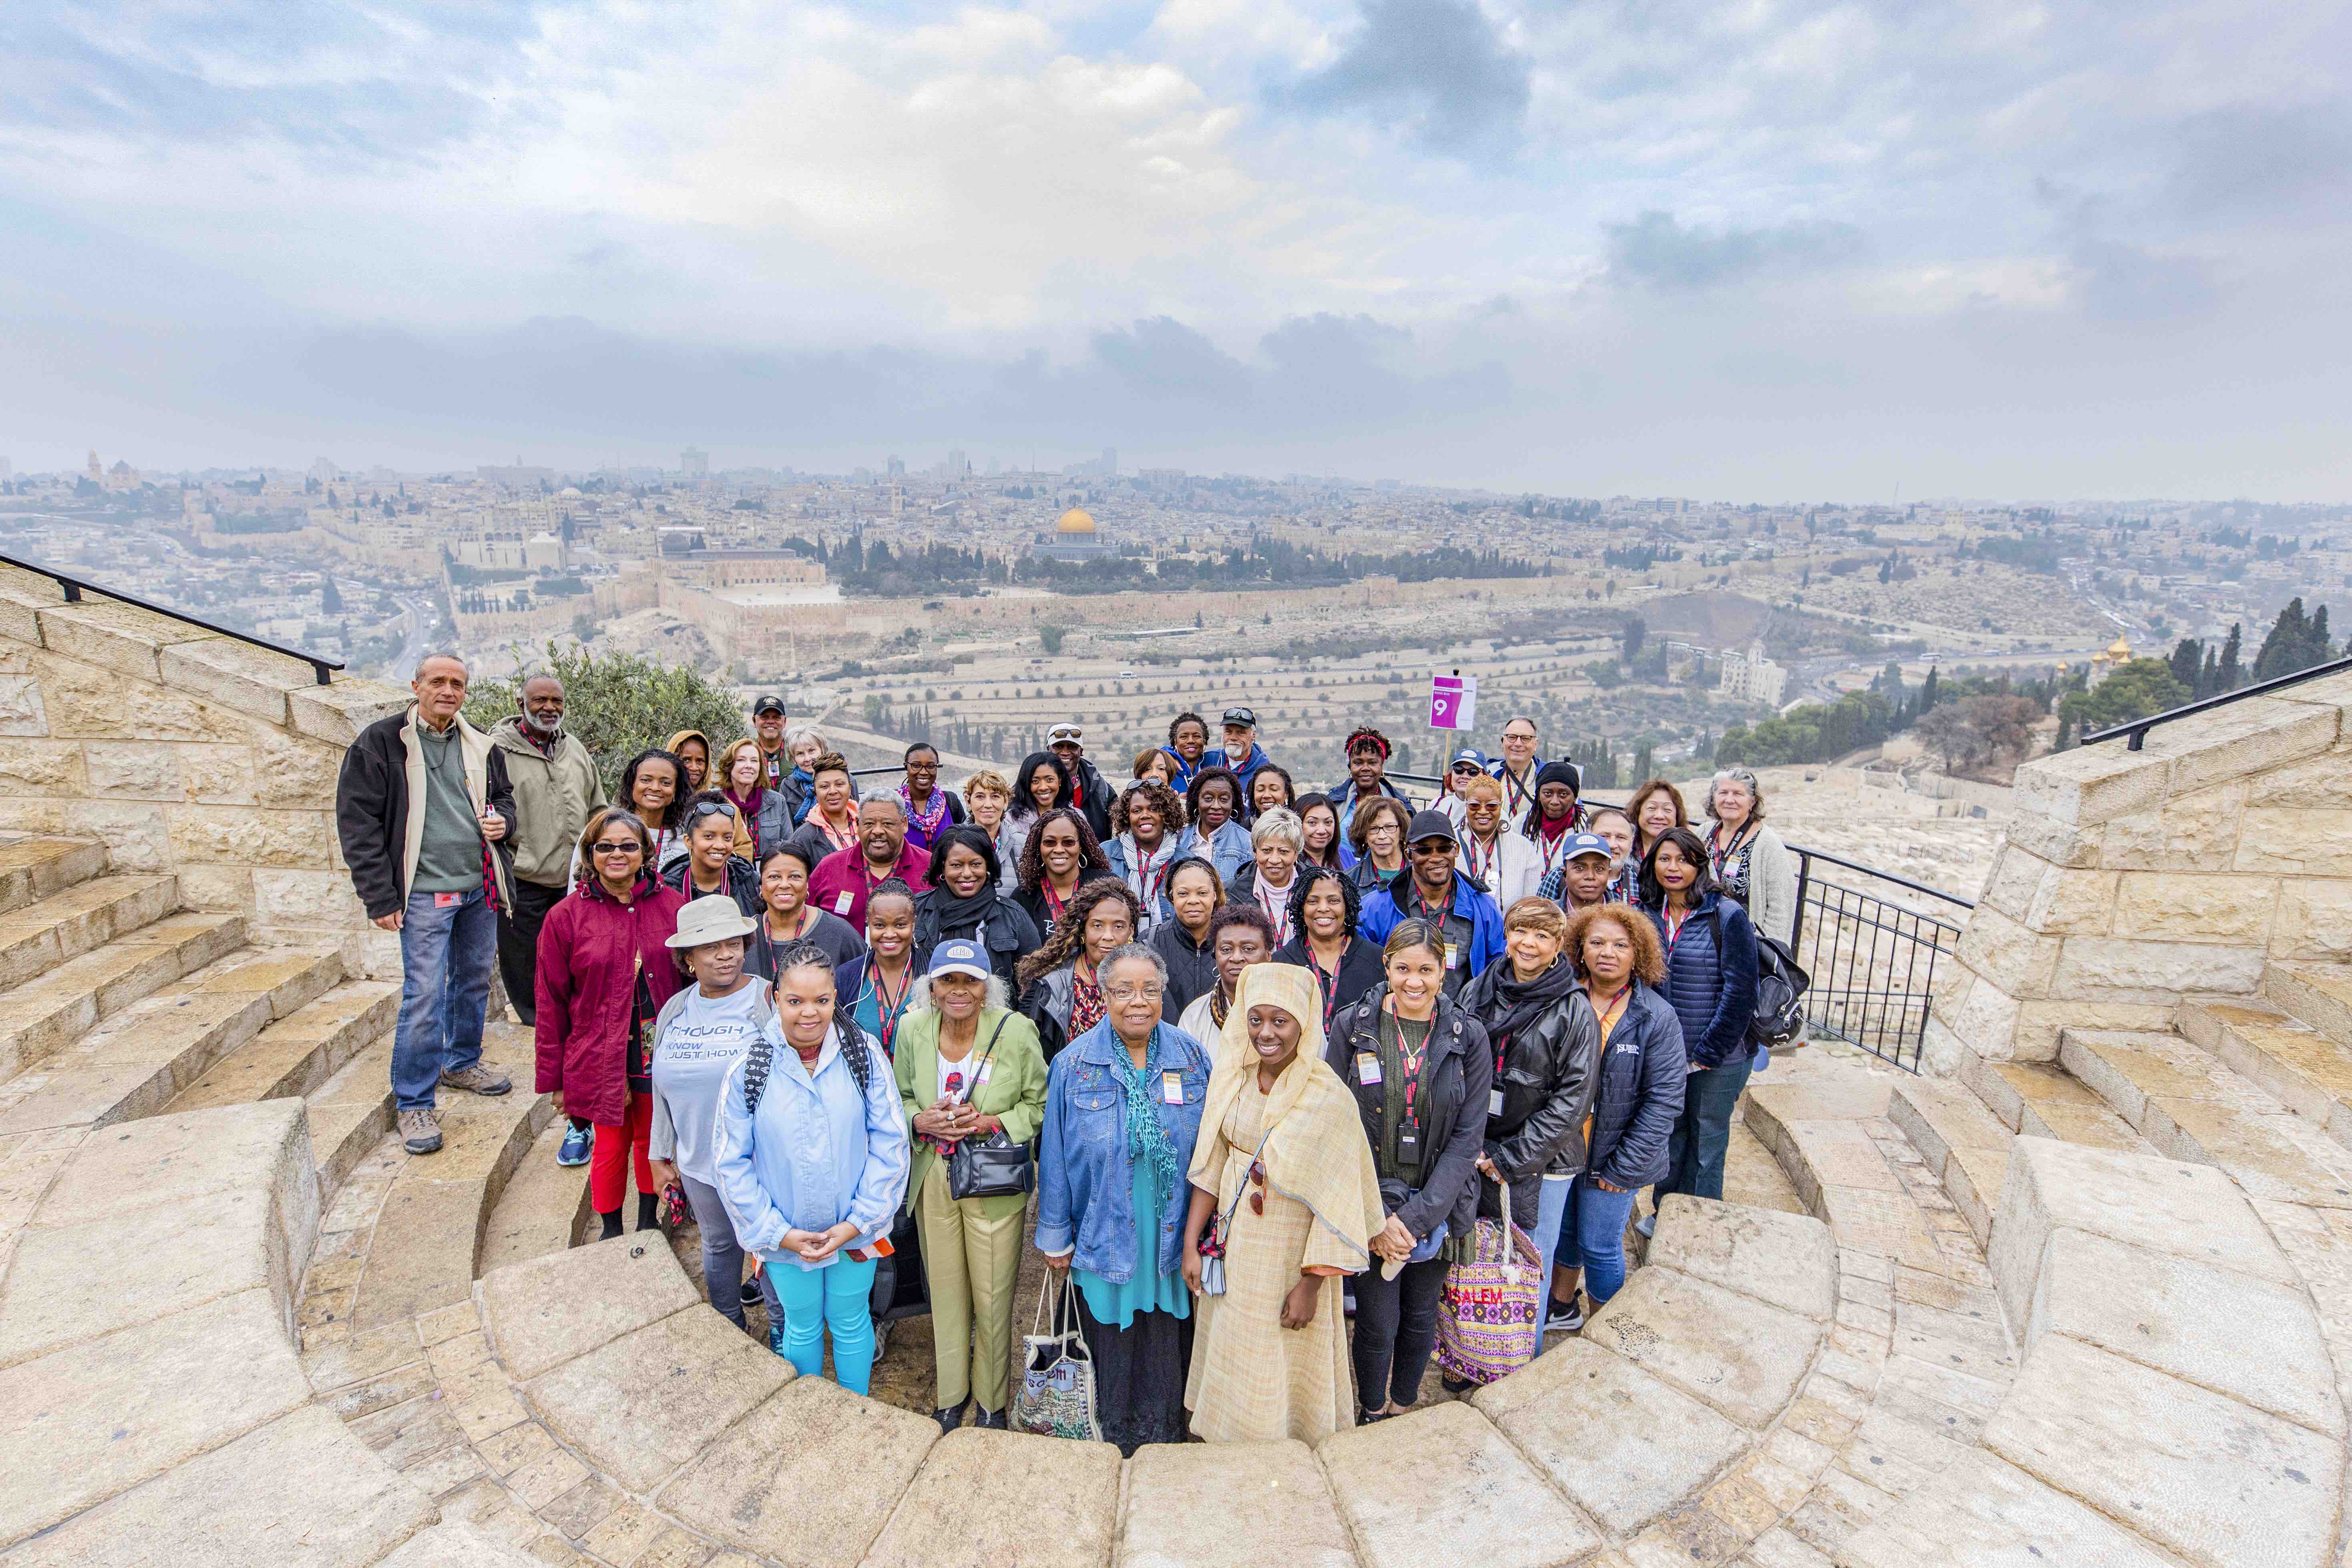 Group of Inspiration travelers on the Mount of Olives, overlooking Jerusalem